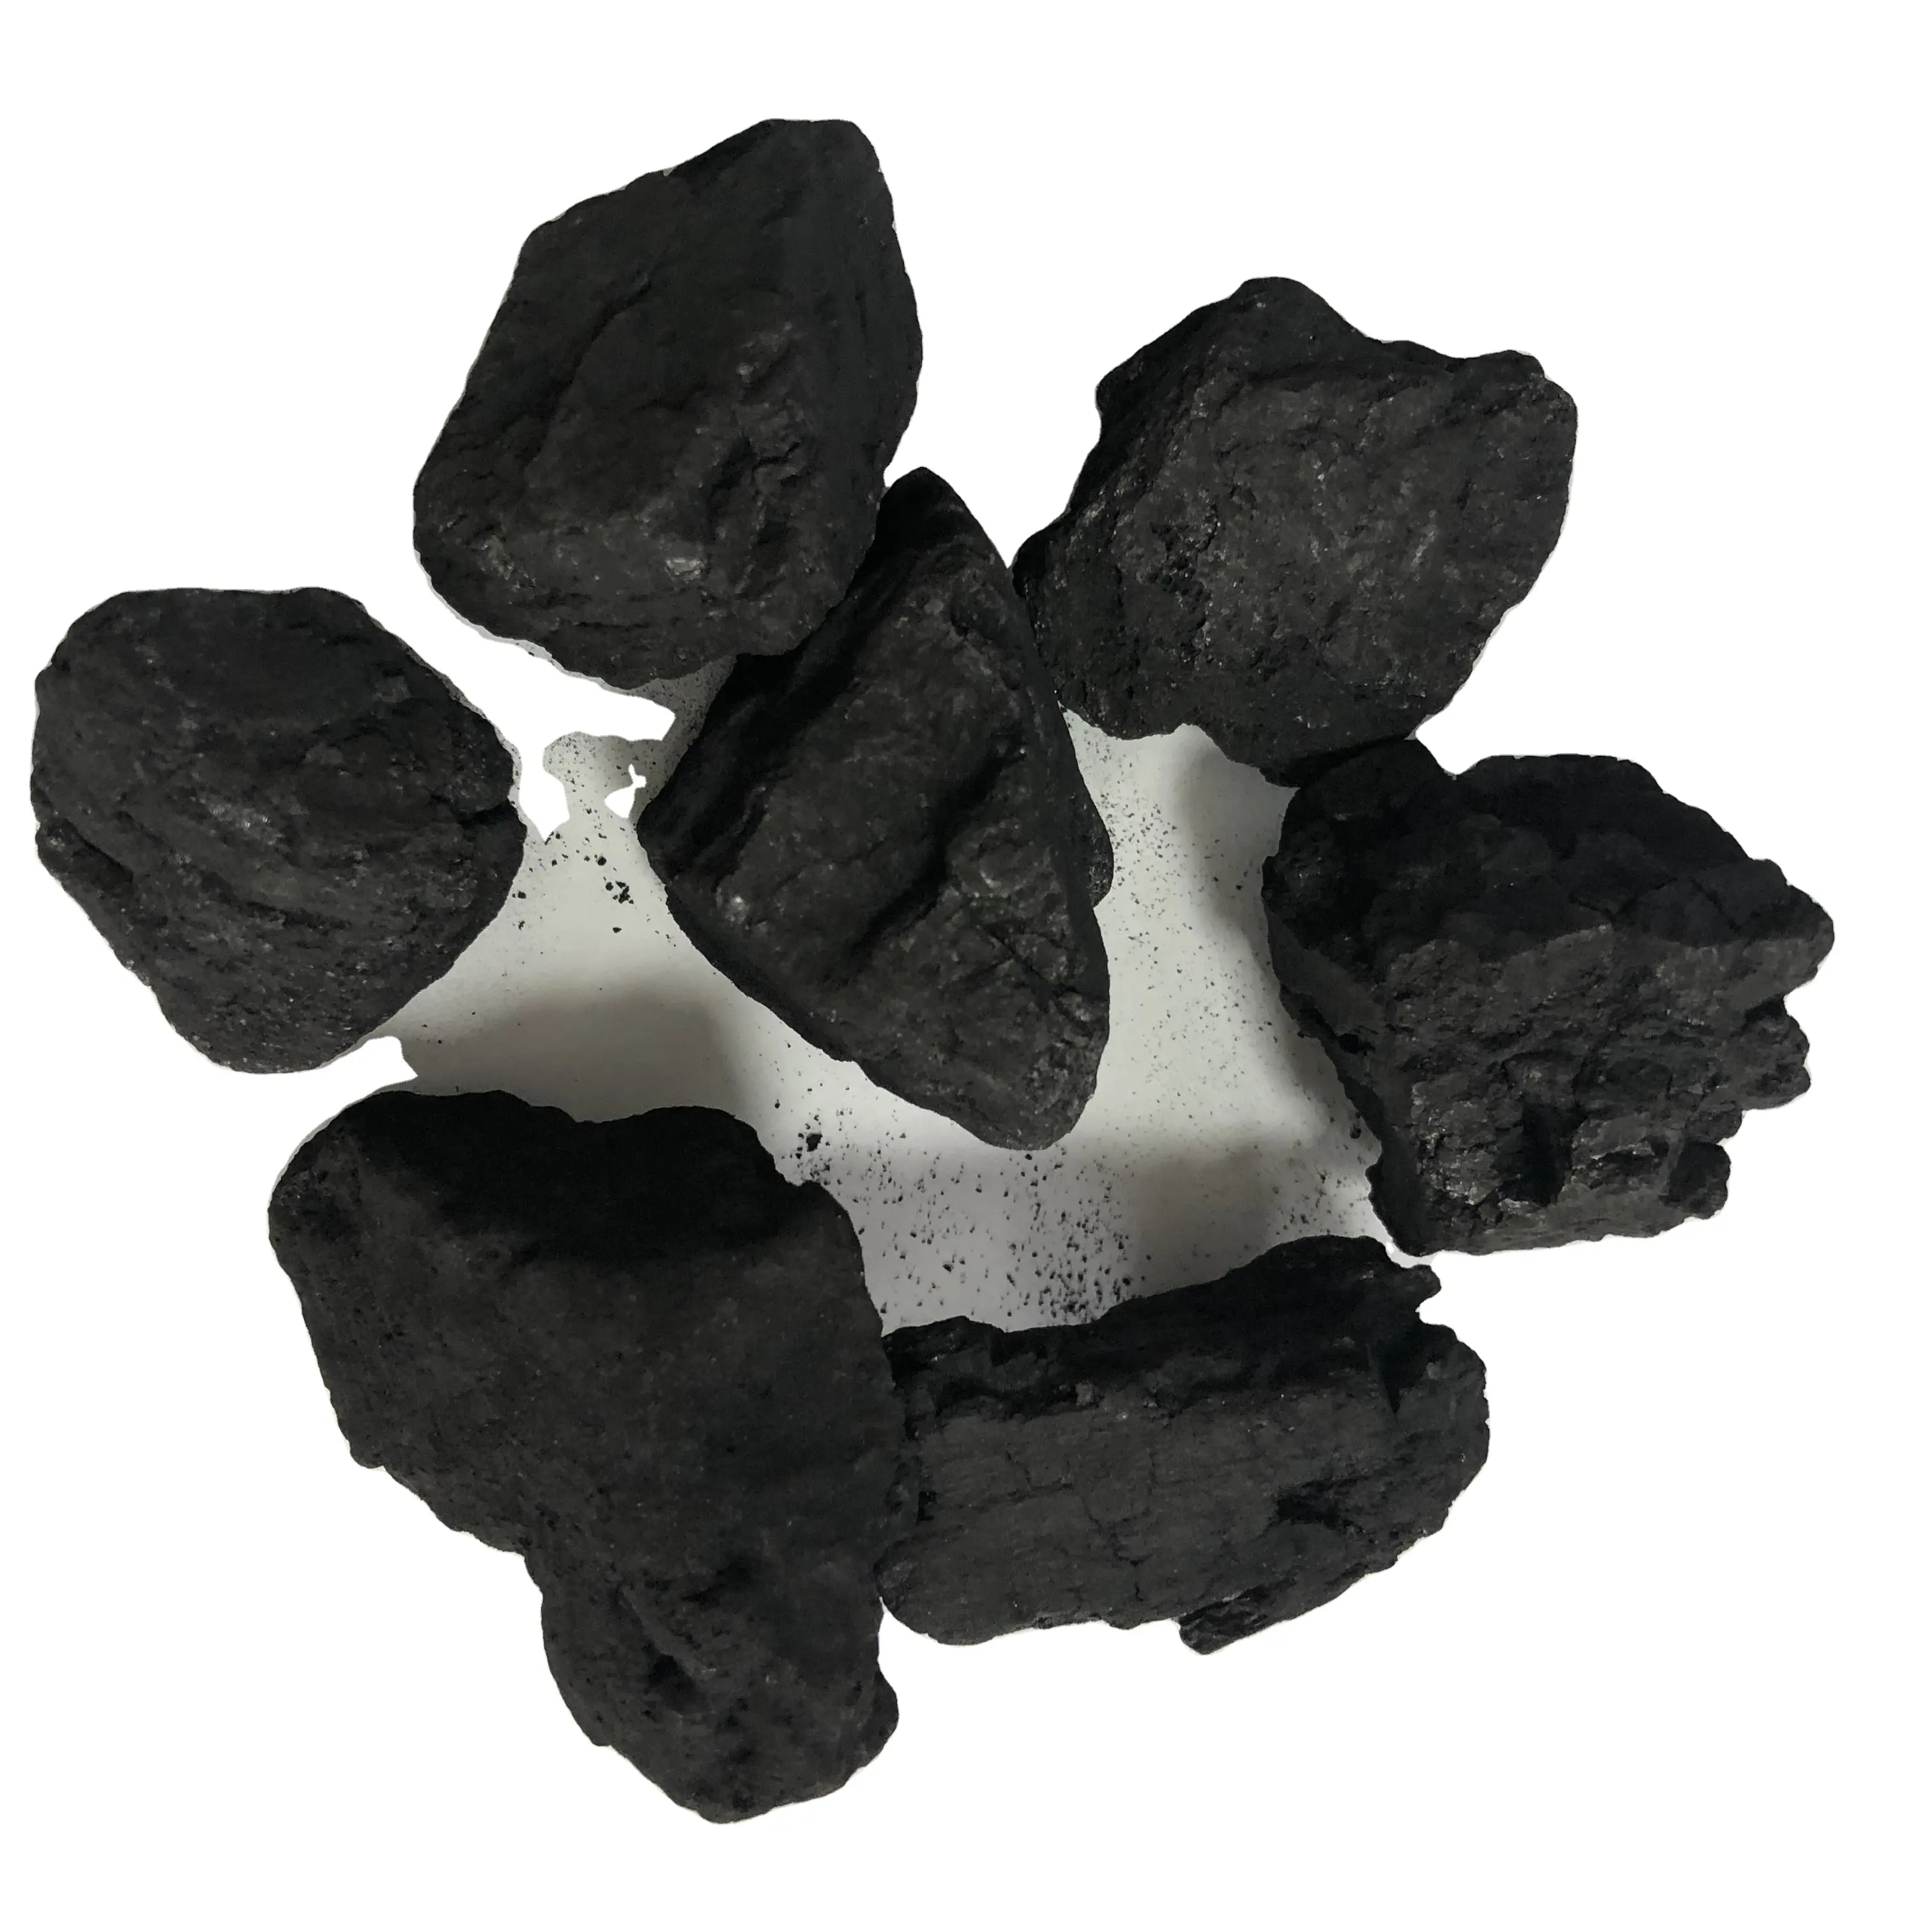 Steam coal coking coal фото 115